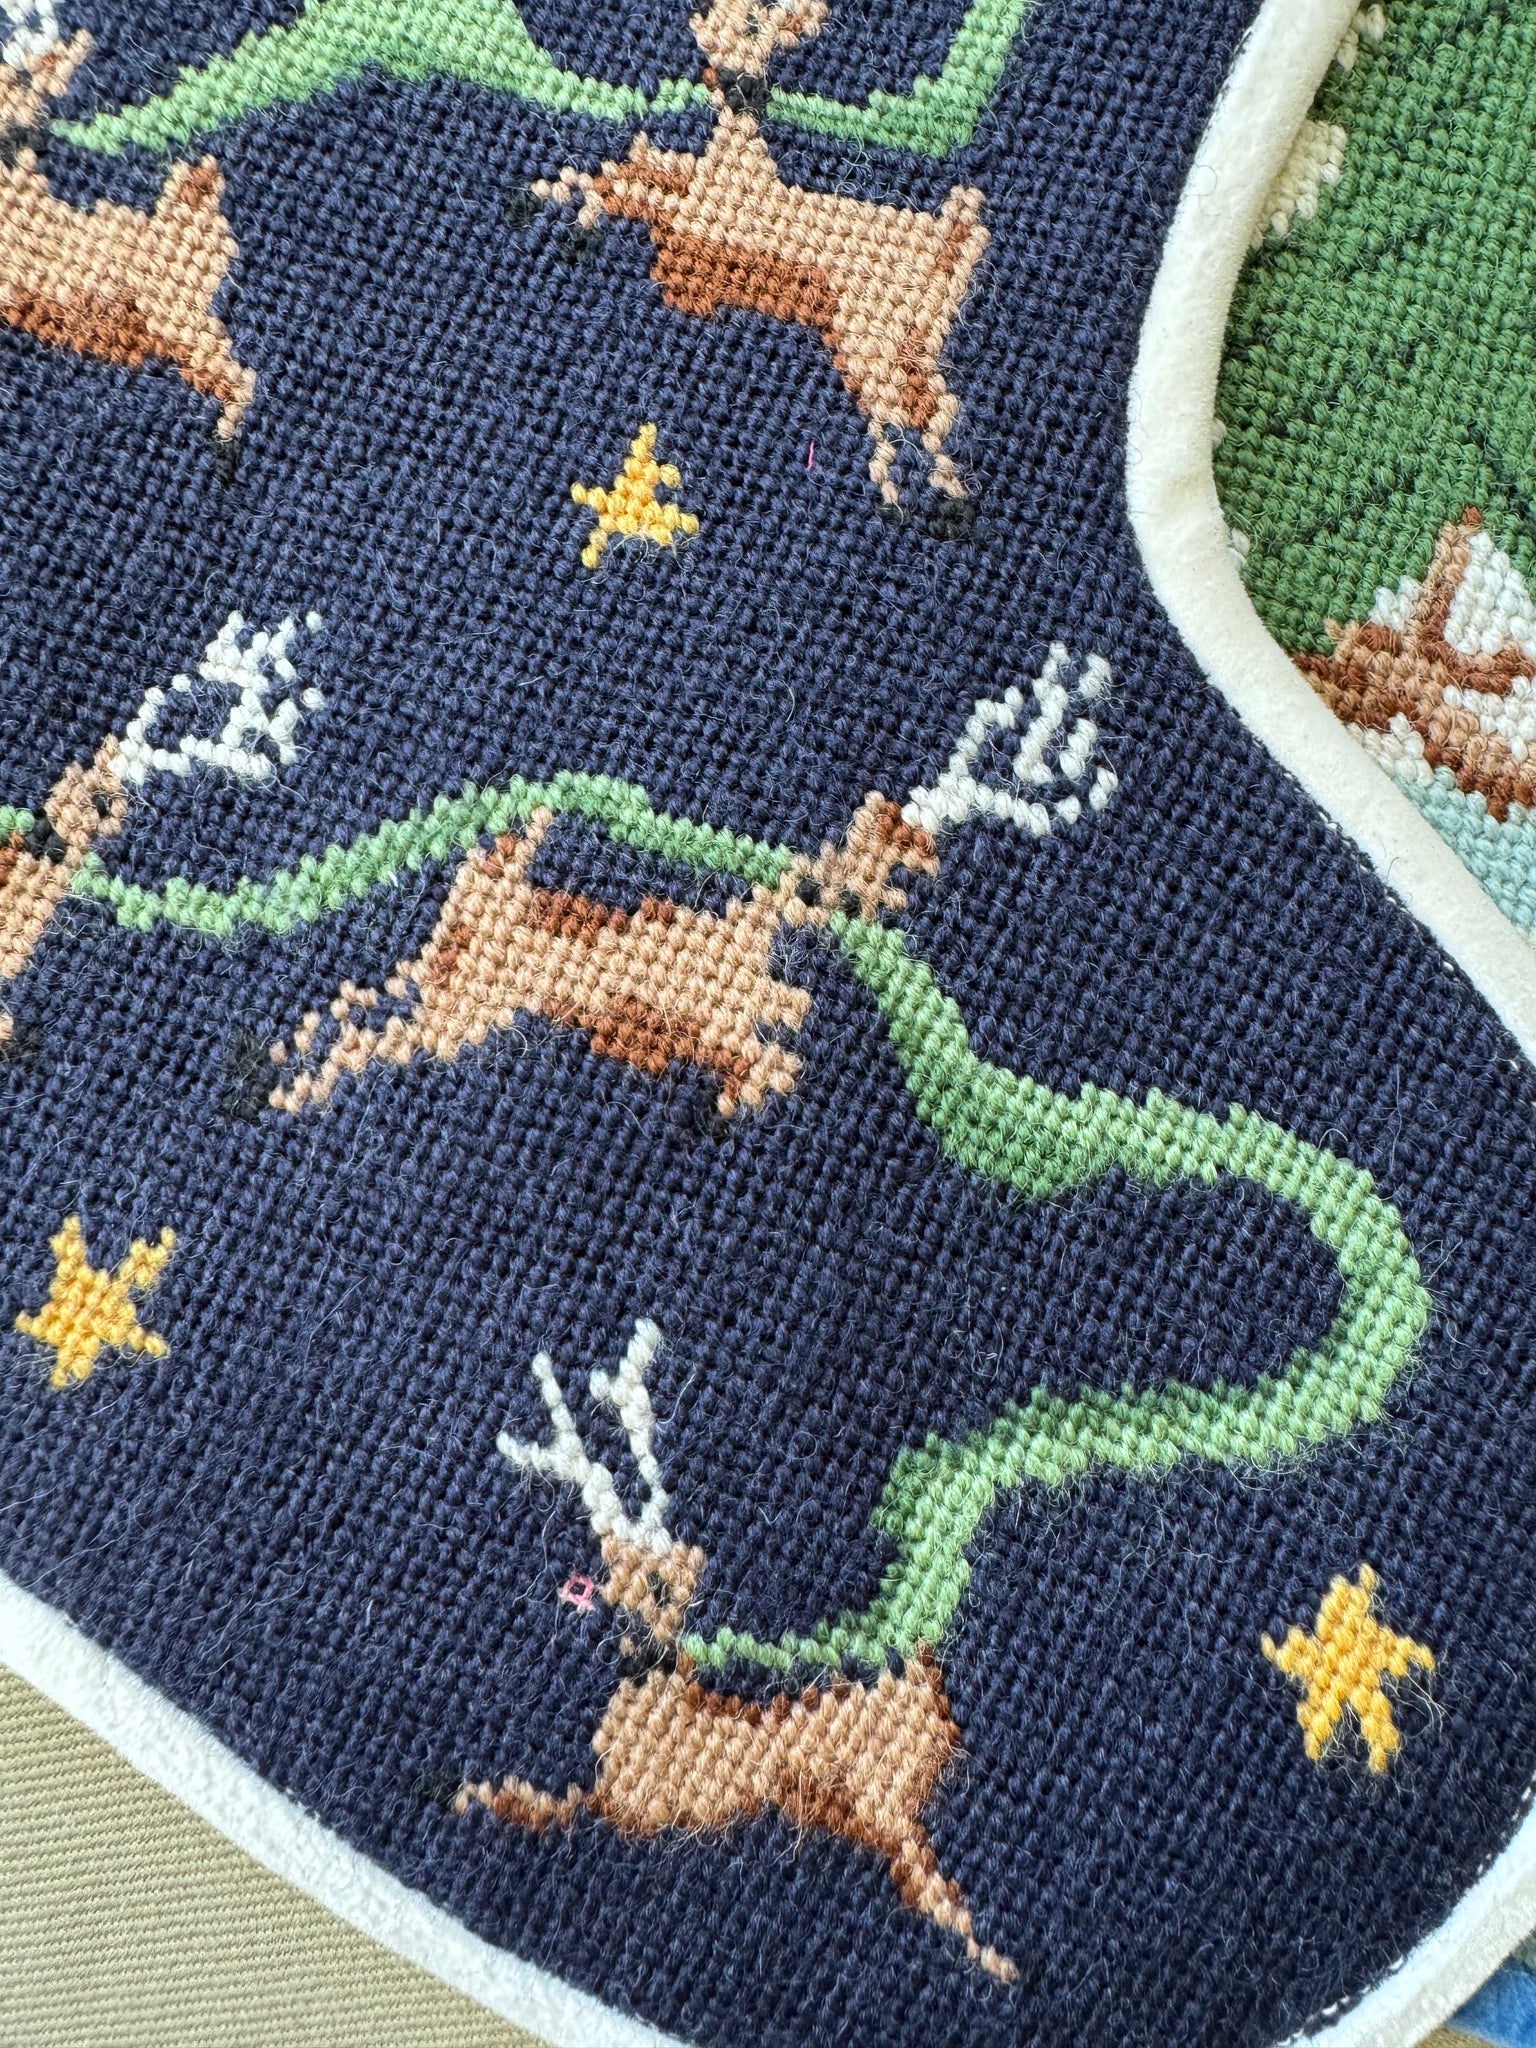 Stitched Stocking - Santa’s Flight